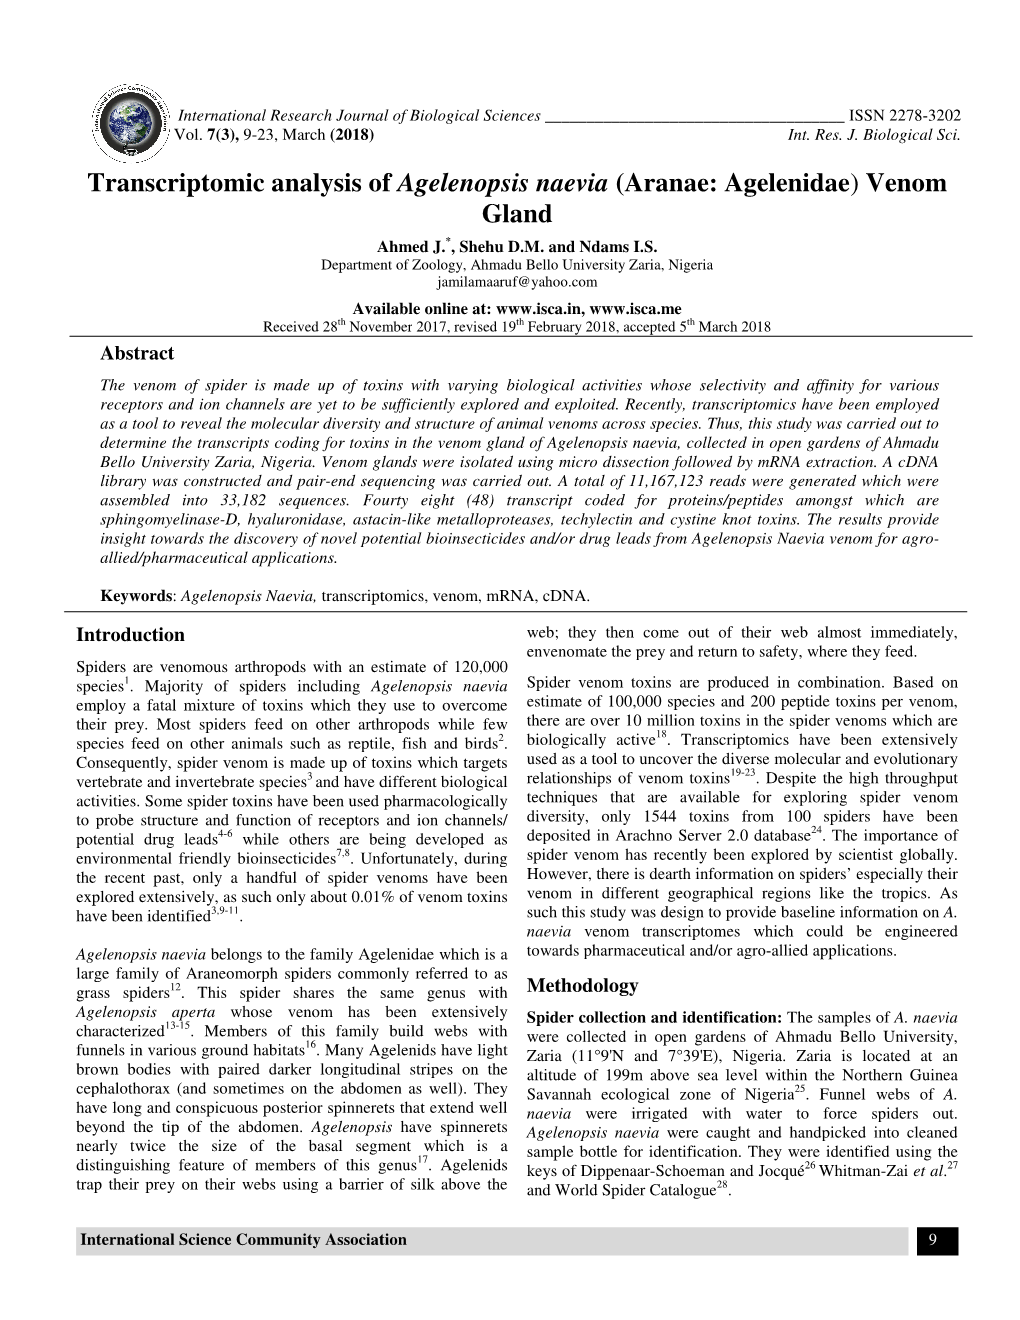 Transcriptomic Analysis of C Analysis of Agelenopsis Naevia (Aranae